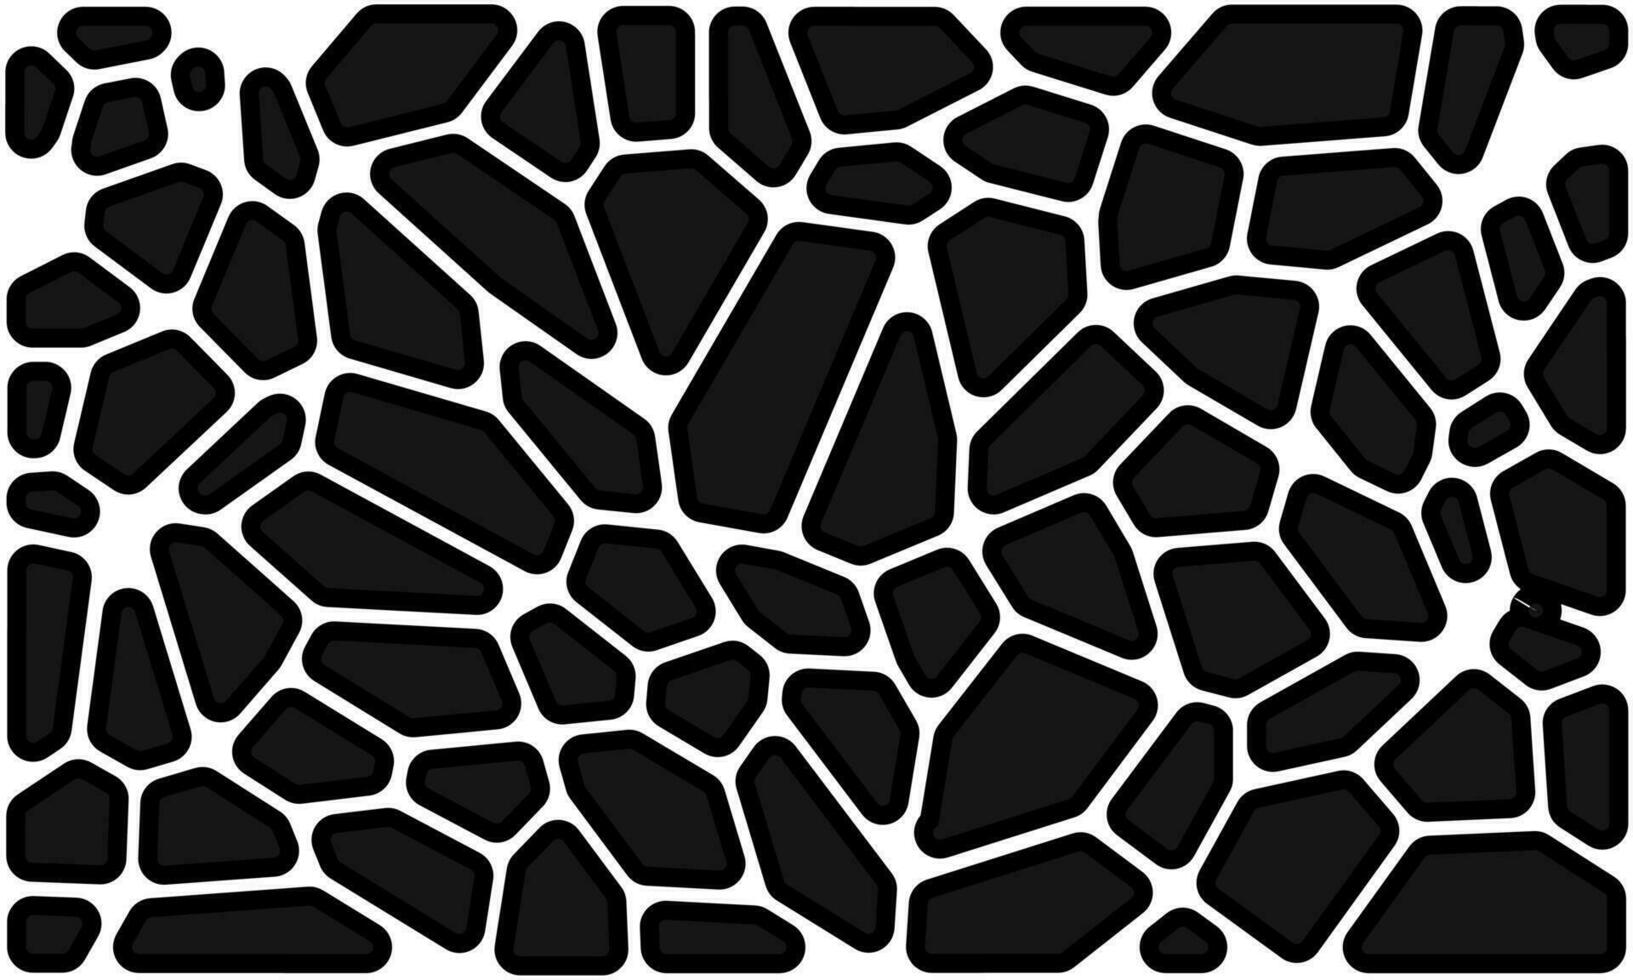 Voronoi geometric pattern.illustration stone effect arrangement pattern.element for decoration of your design backround. vector